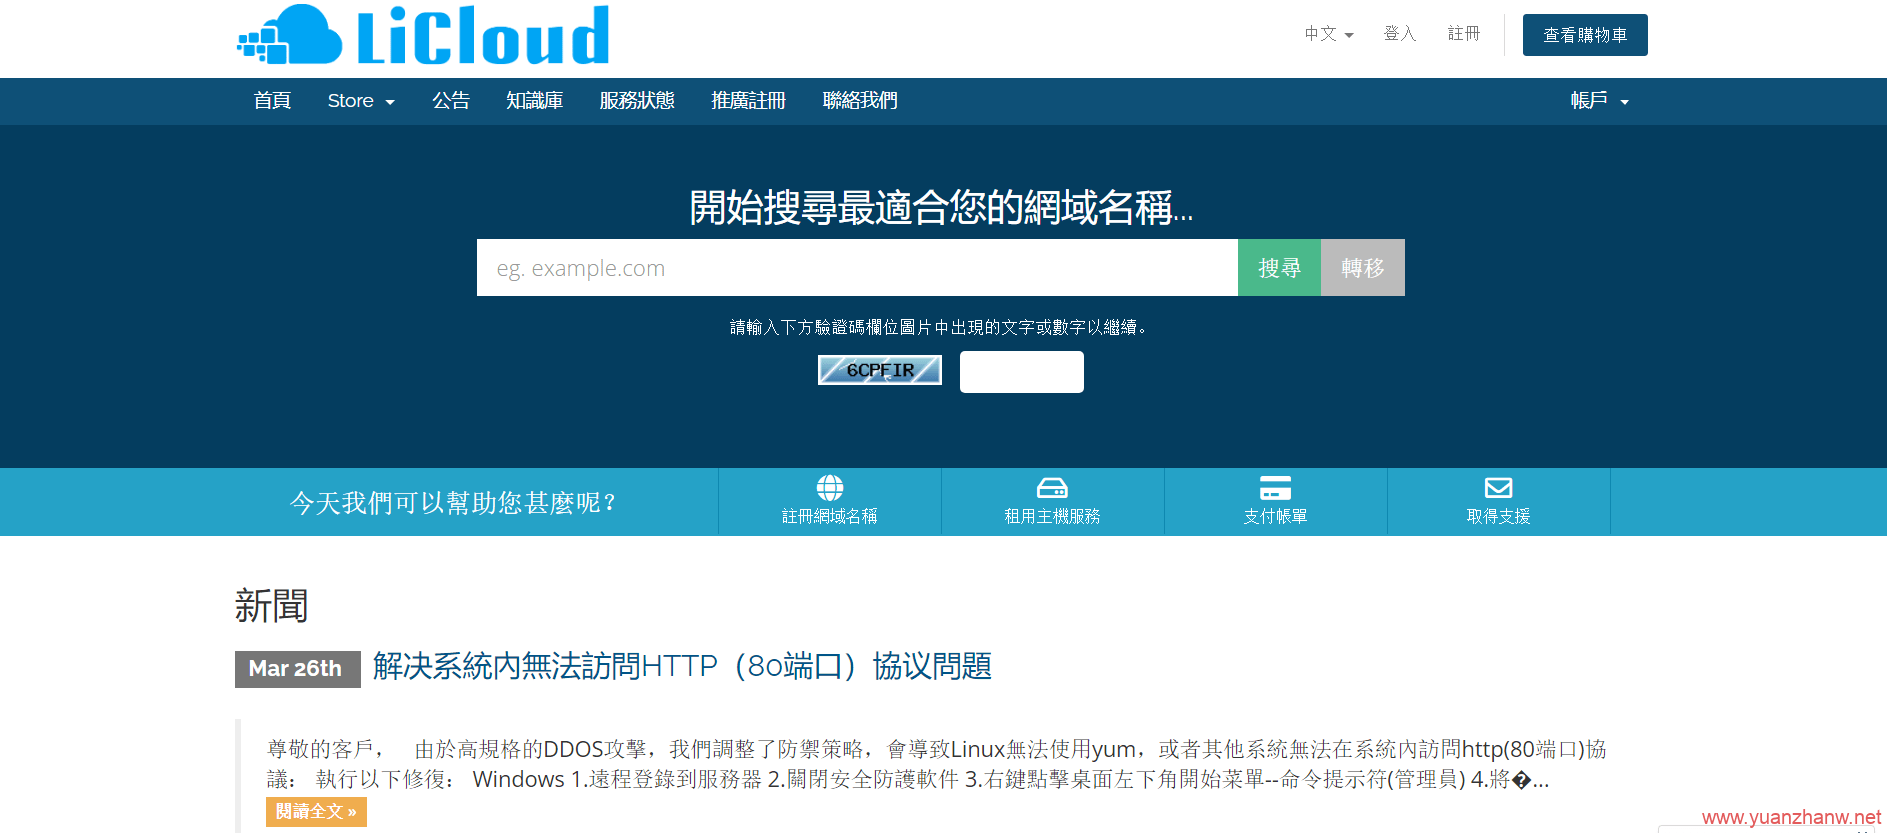 %LiCloud-香港E3-1230v2独立服务器，16GB内存/240GB SSD硬盘/无限流量/15Mbps BGP线路，29.99USD/月起-猿站网-插图